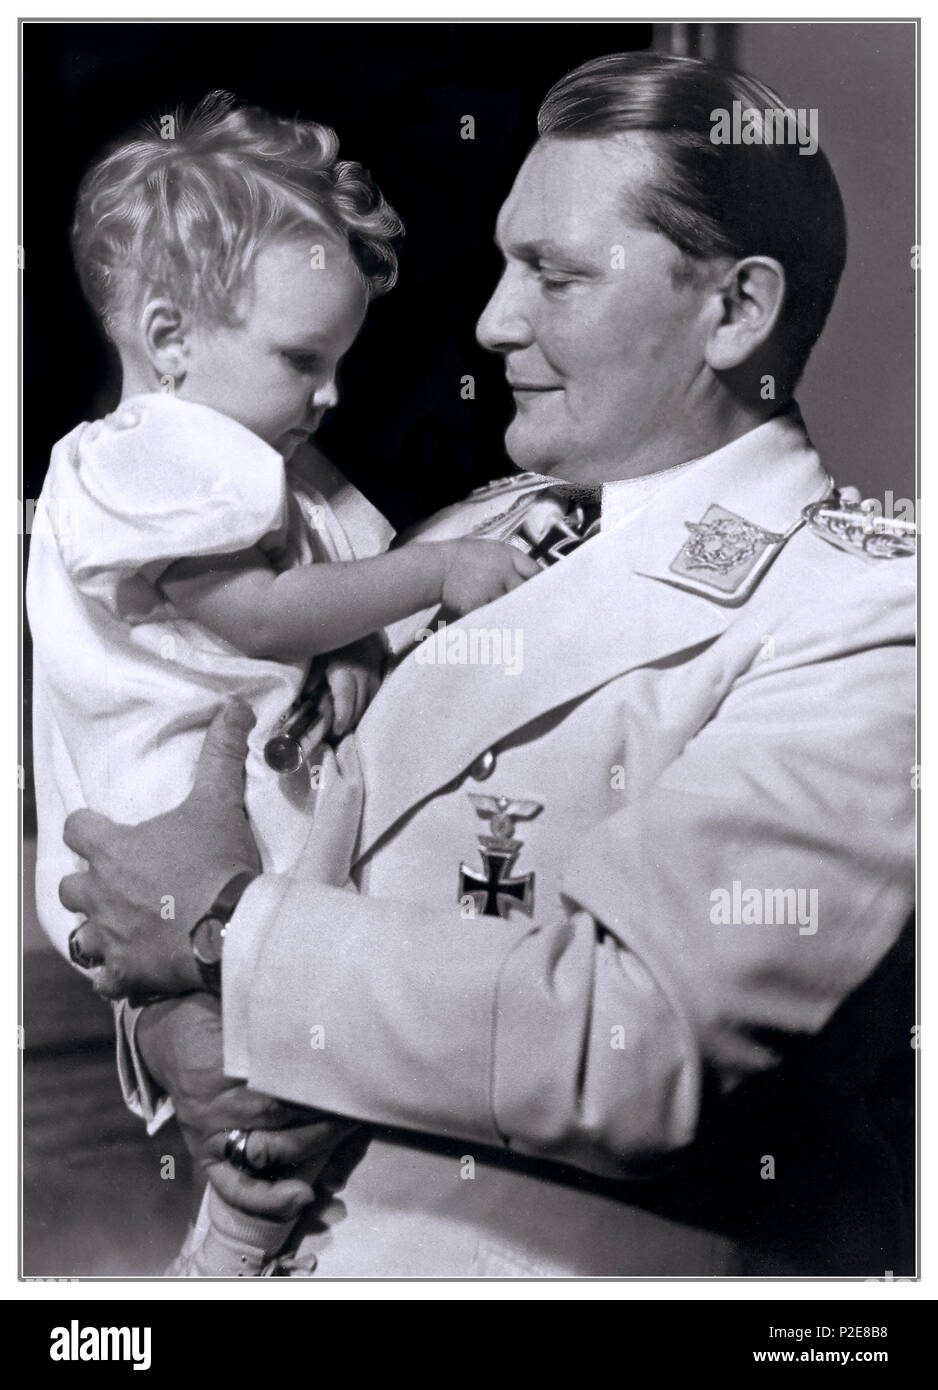 HERMANN GOERING Vintage paternal portrait 1930’s Infant Edda Goering with her uniformed father Hermann Goering head of Nazi Luftwaffe 1938 Berlin  Nazi Germany Stock Photo